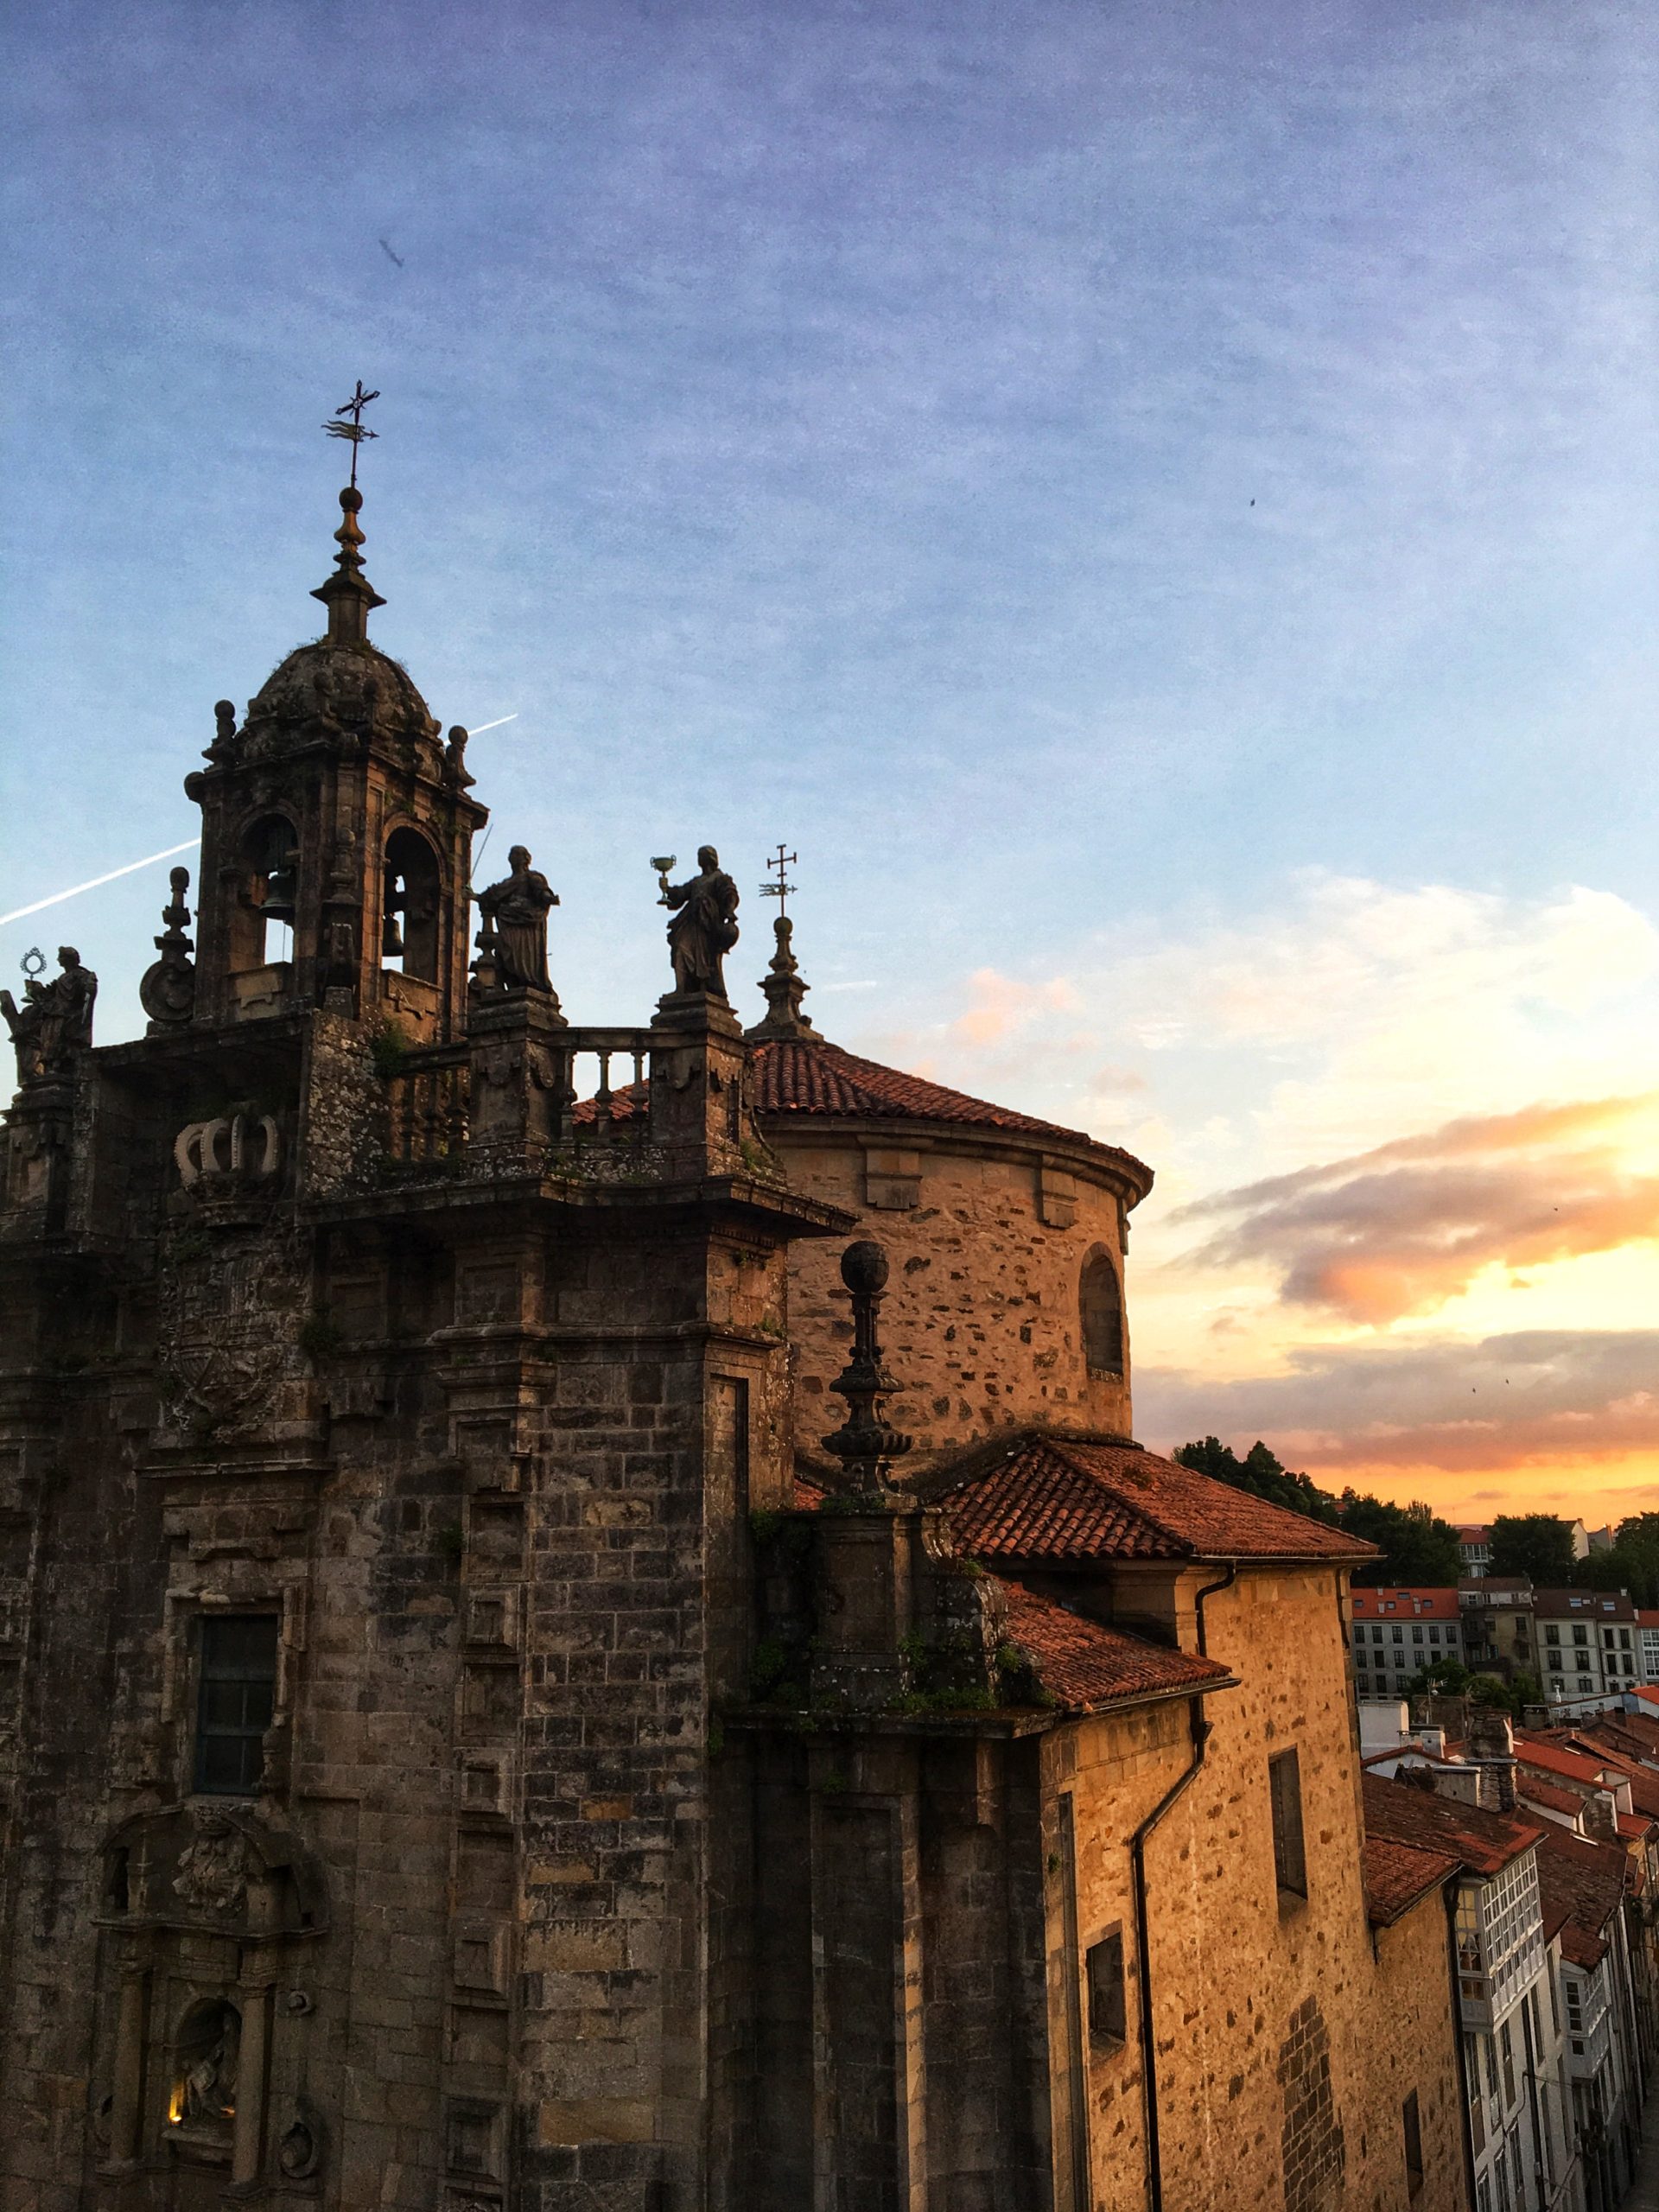 July 25 was The Feast Day of St. James Celebration in Santiago de Compostela Spain